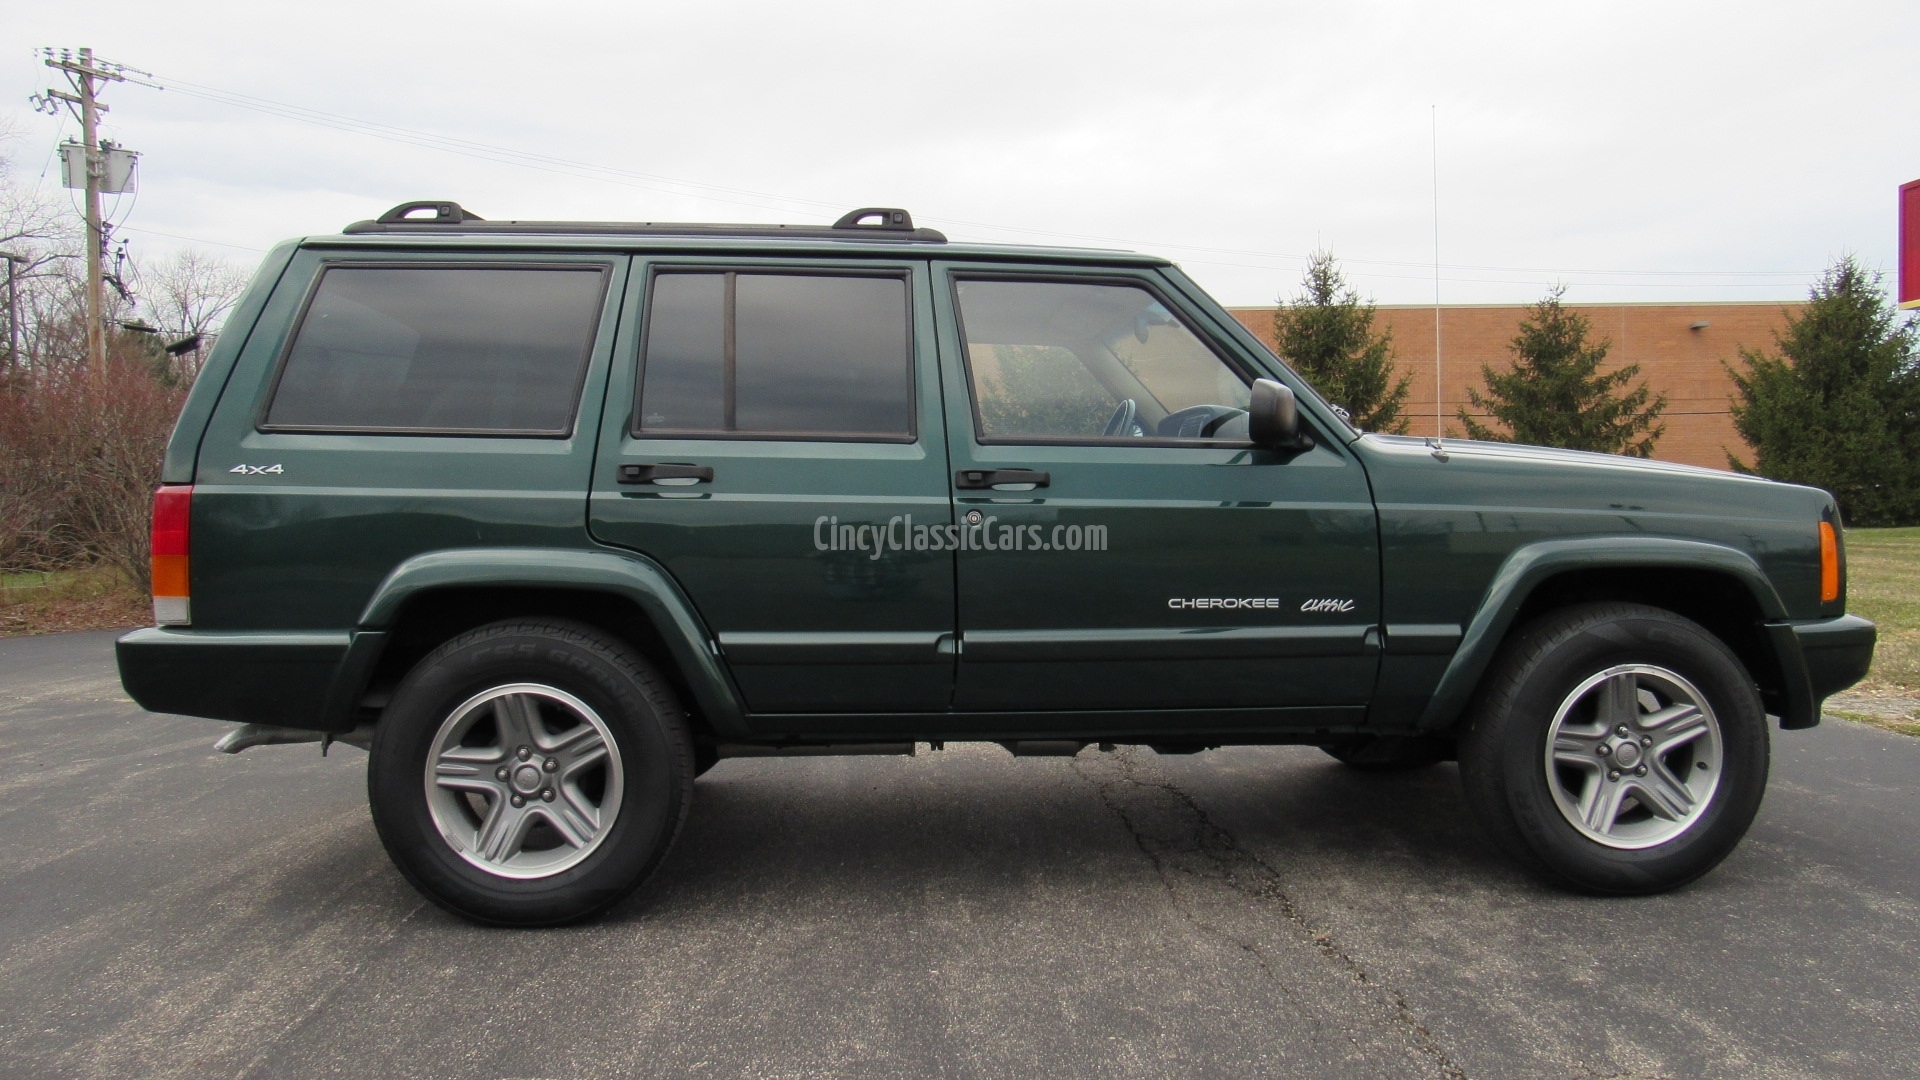 2000 Jeep Cherokee 4wd Sold Cincy Classic Cars